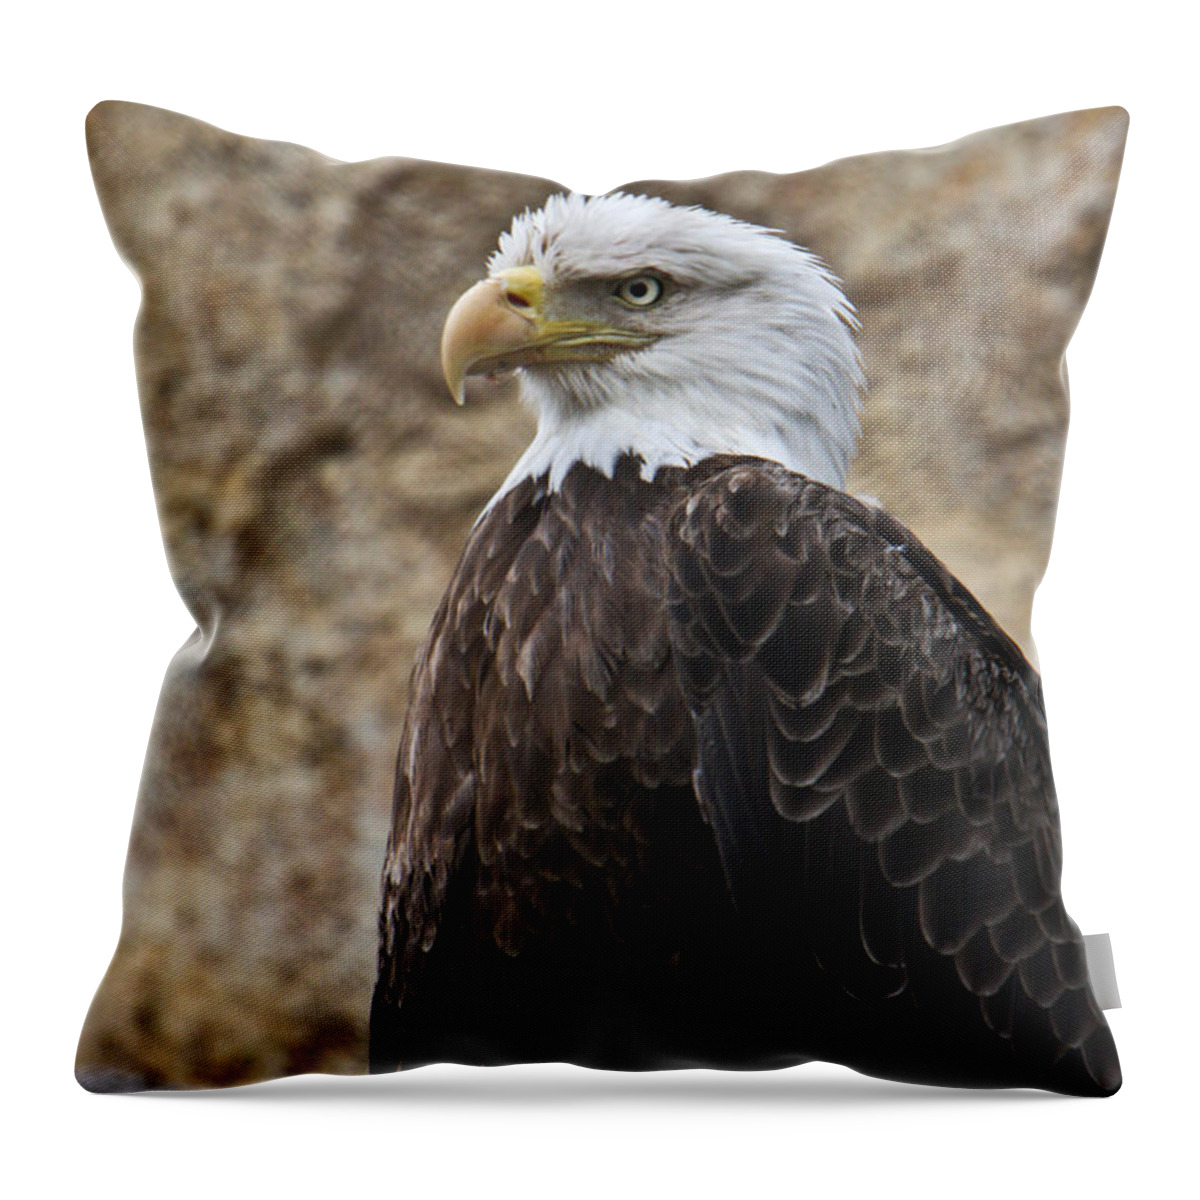 Bald Throw Pillow featuring the photograph Bald Eagle - Portrait 2 by Douglas Barnett